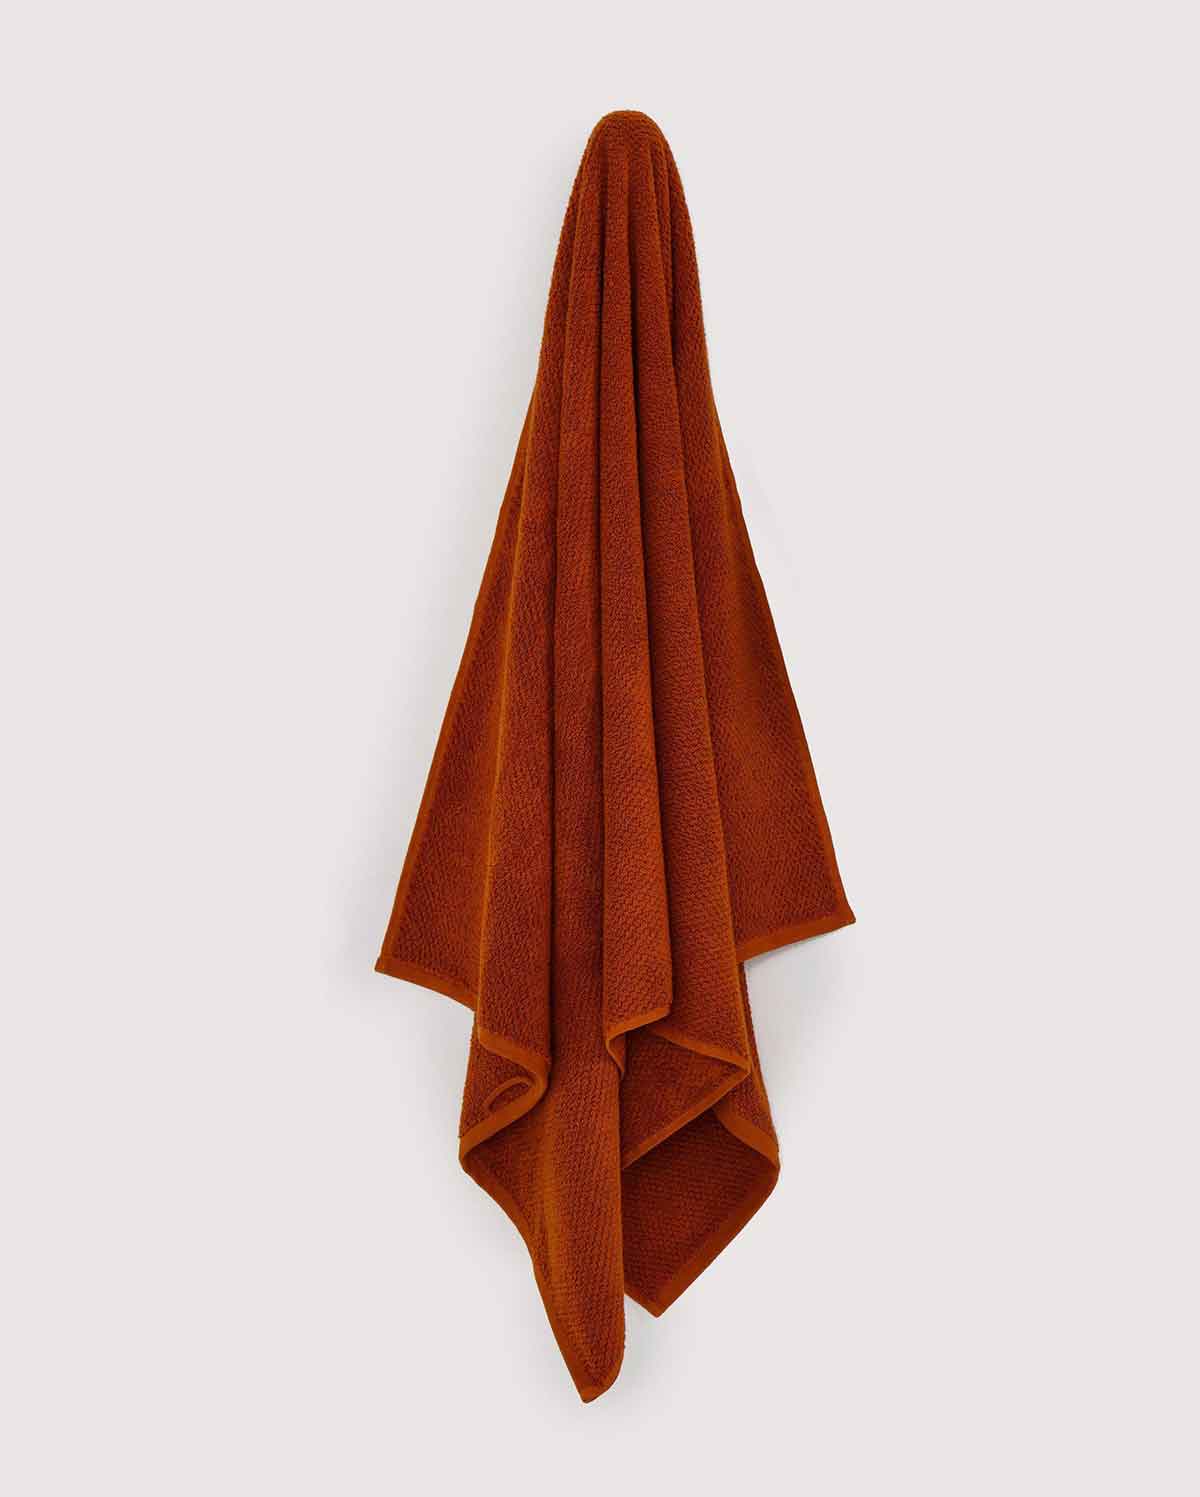 Cotton Willow Towel Set - Mustard (3 Towels)